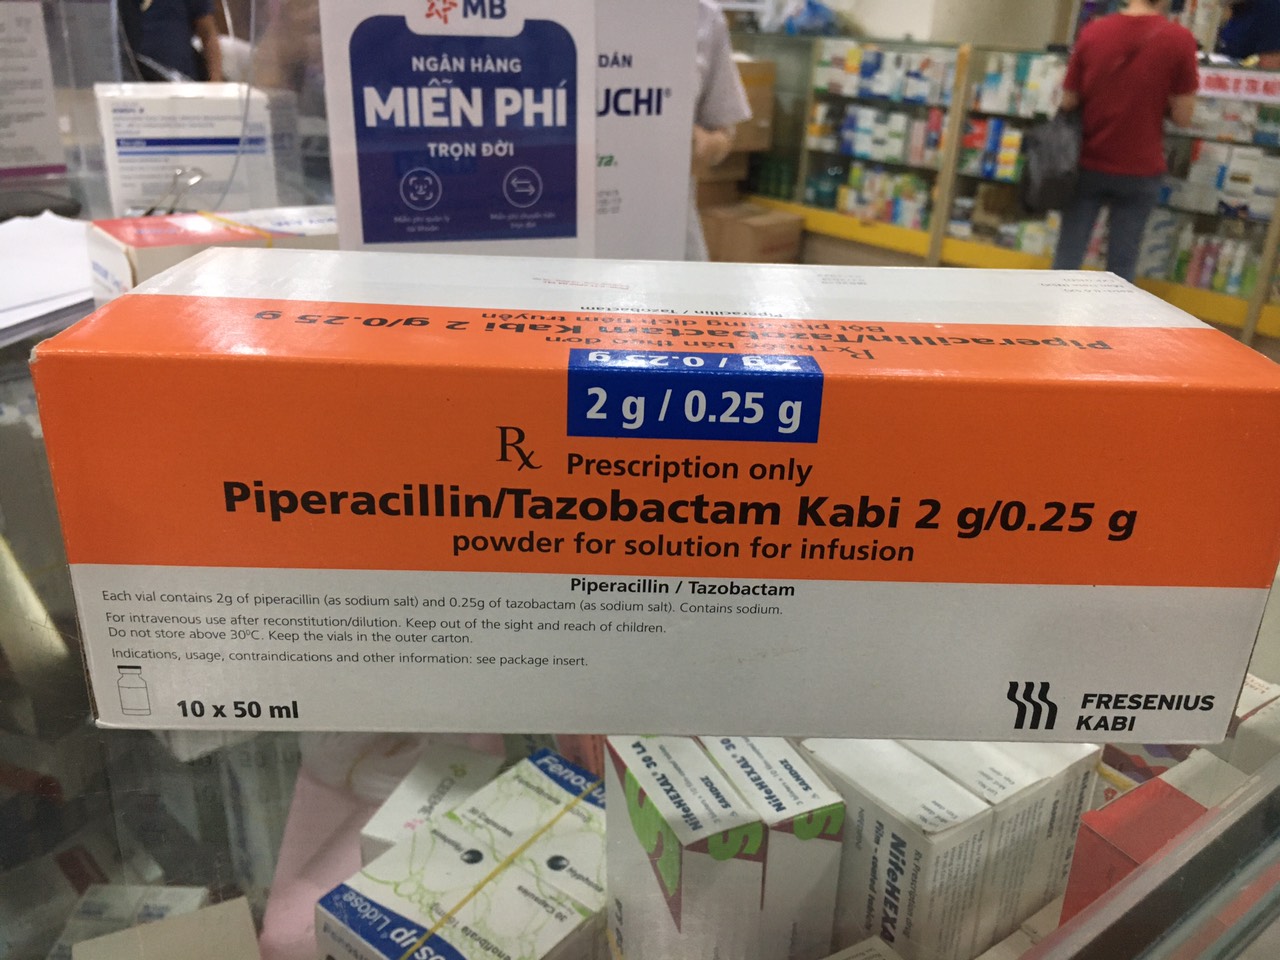 Piperacillin/Tazobactam Kabi 2g/0.25g